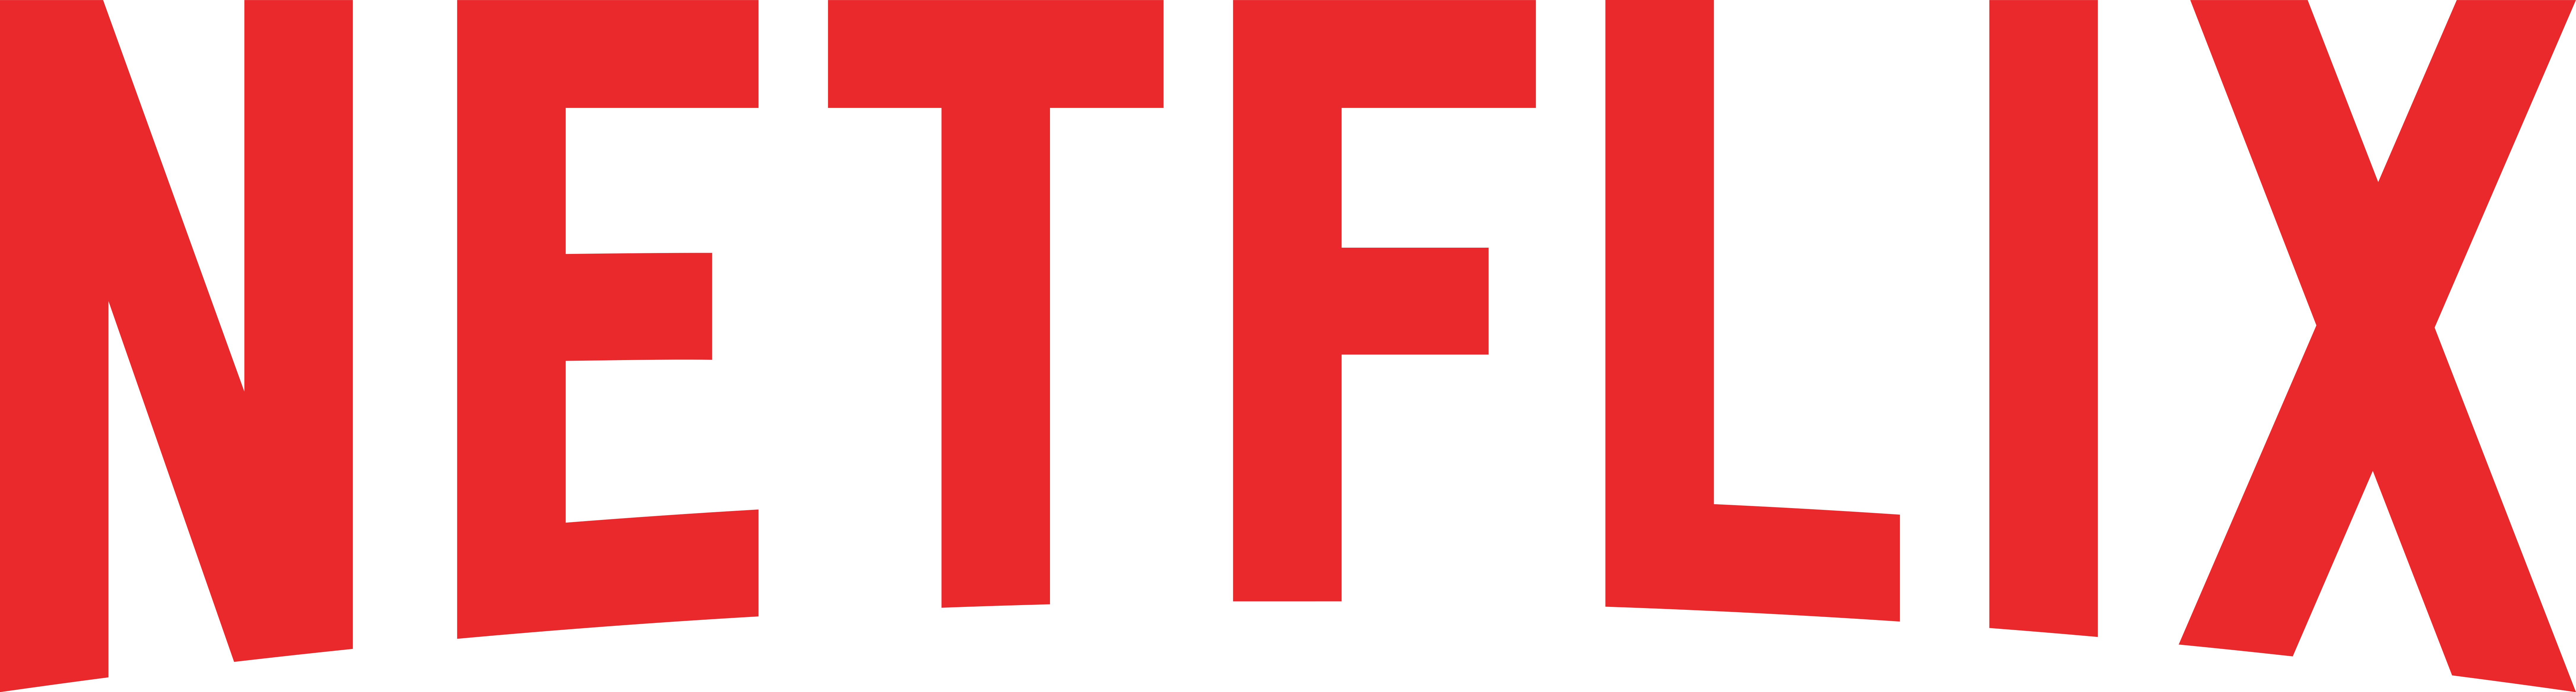 Netflix.com Logo - Netflix To Launch In Singapore In Early 2016 « Blog | lesterchan.net